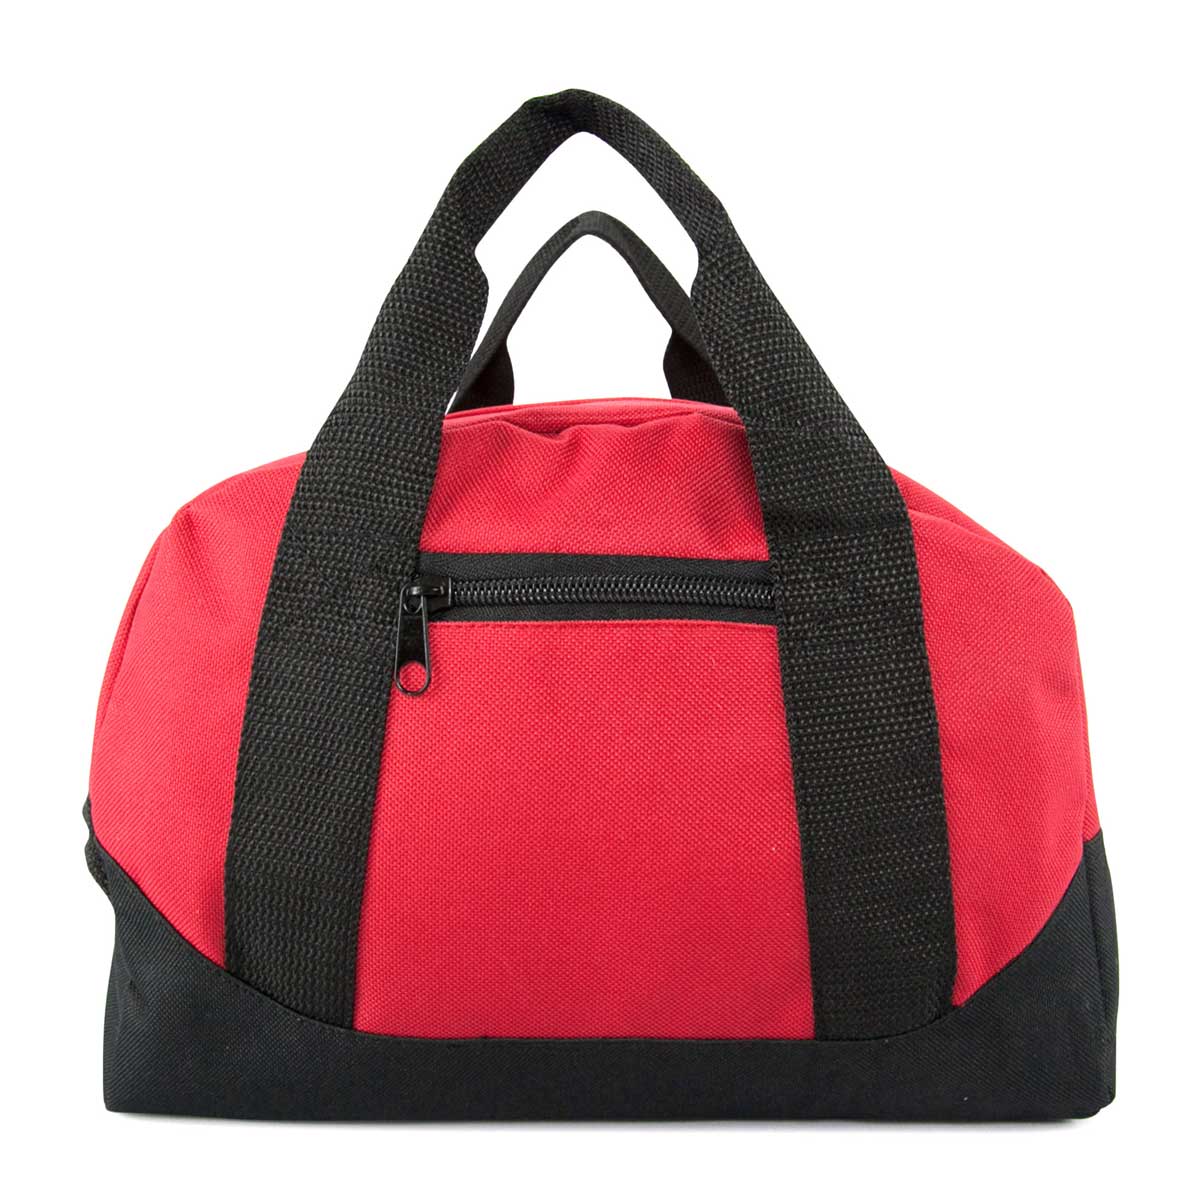 BuyAgain Duffle Bag, 17 Small Travel Carry On Sport Duffel Gym Bag.